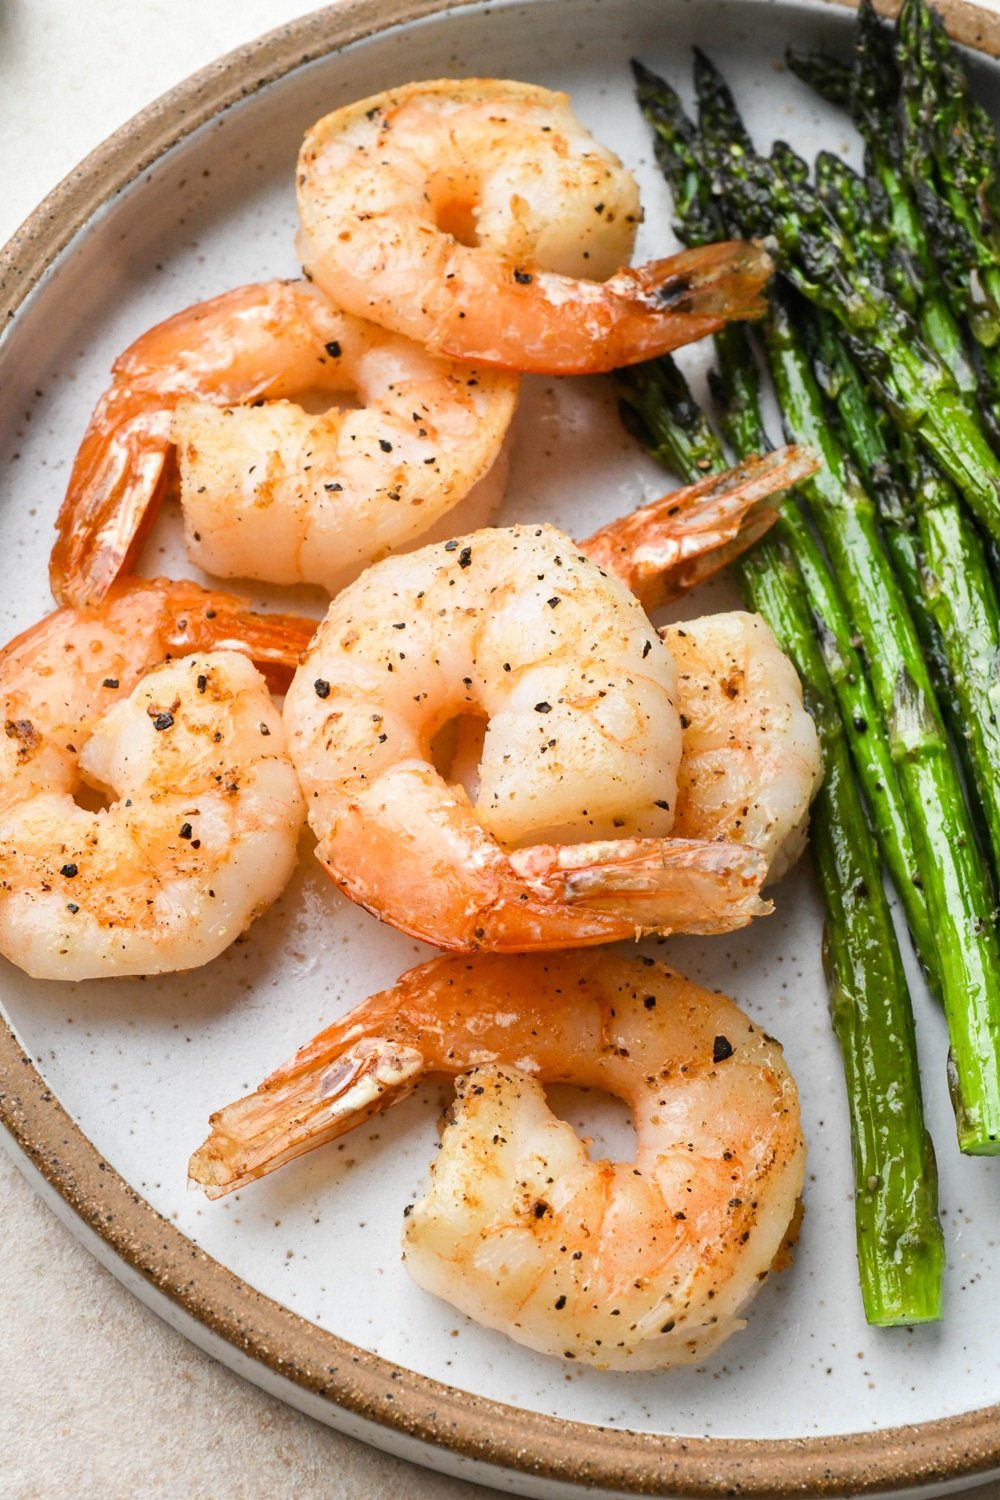 Six pan seared shrimp on a ceramic plate with roasted asparagus.